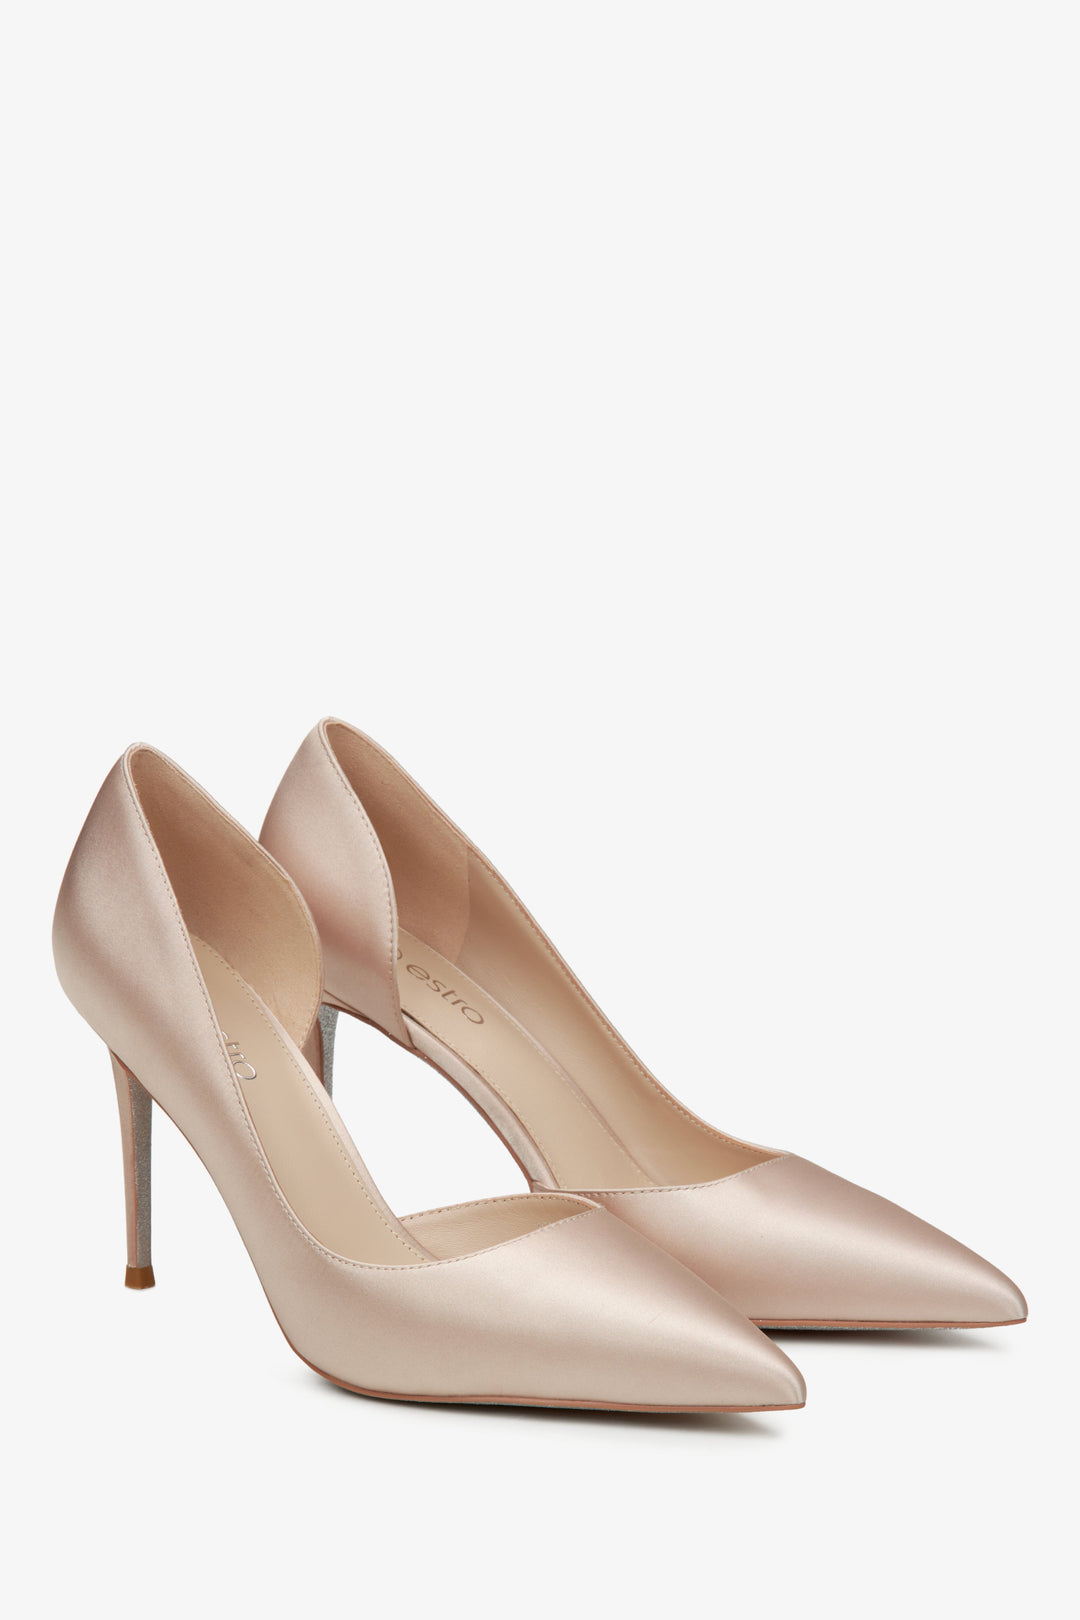 Women's powder pink Estro high heels with a satin finish.